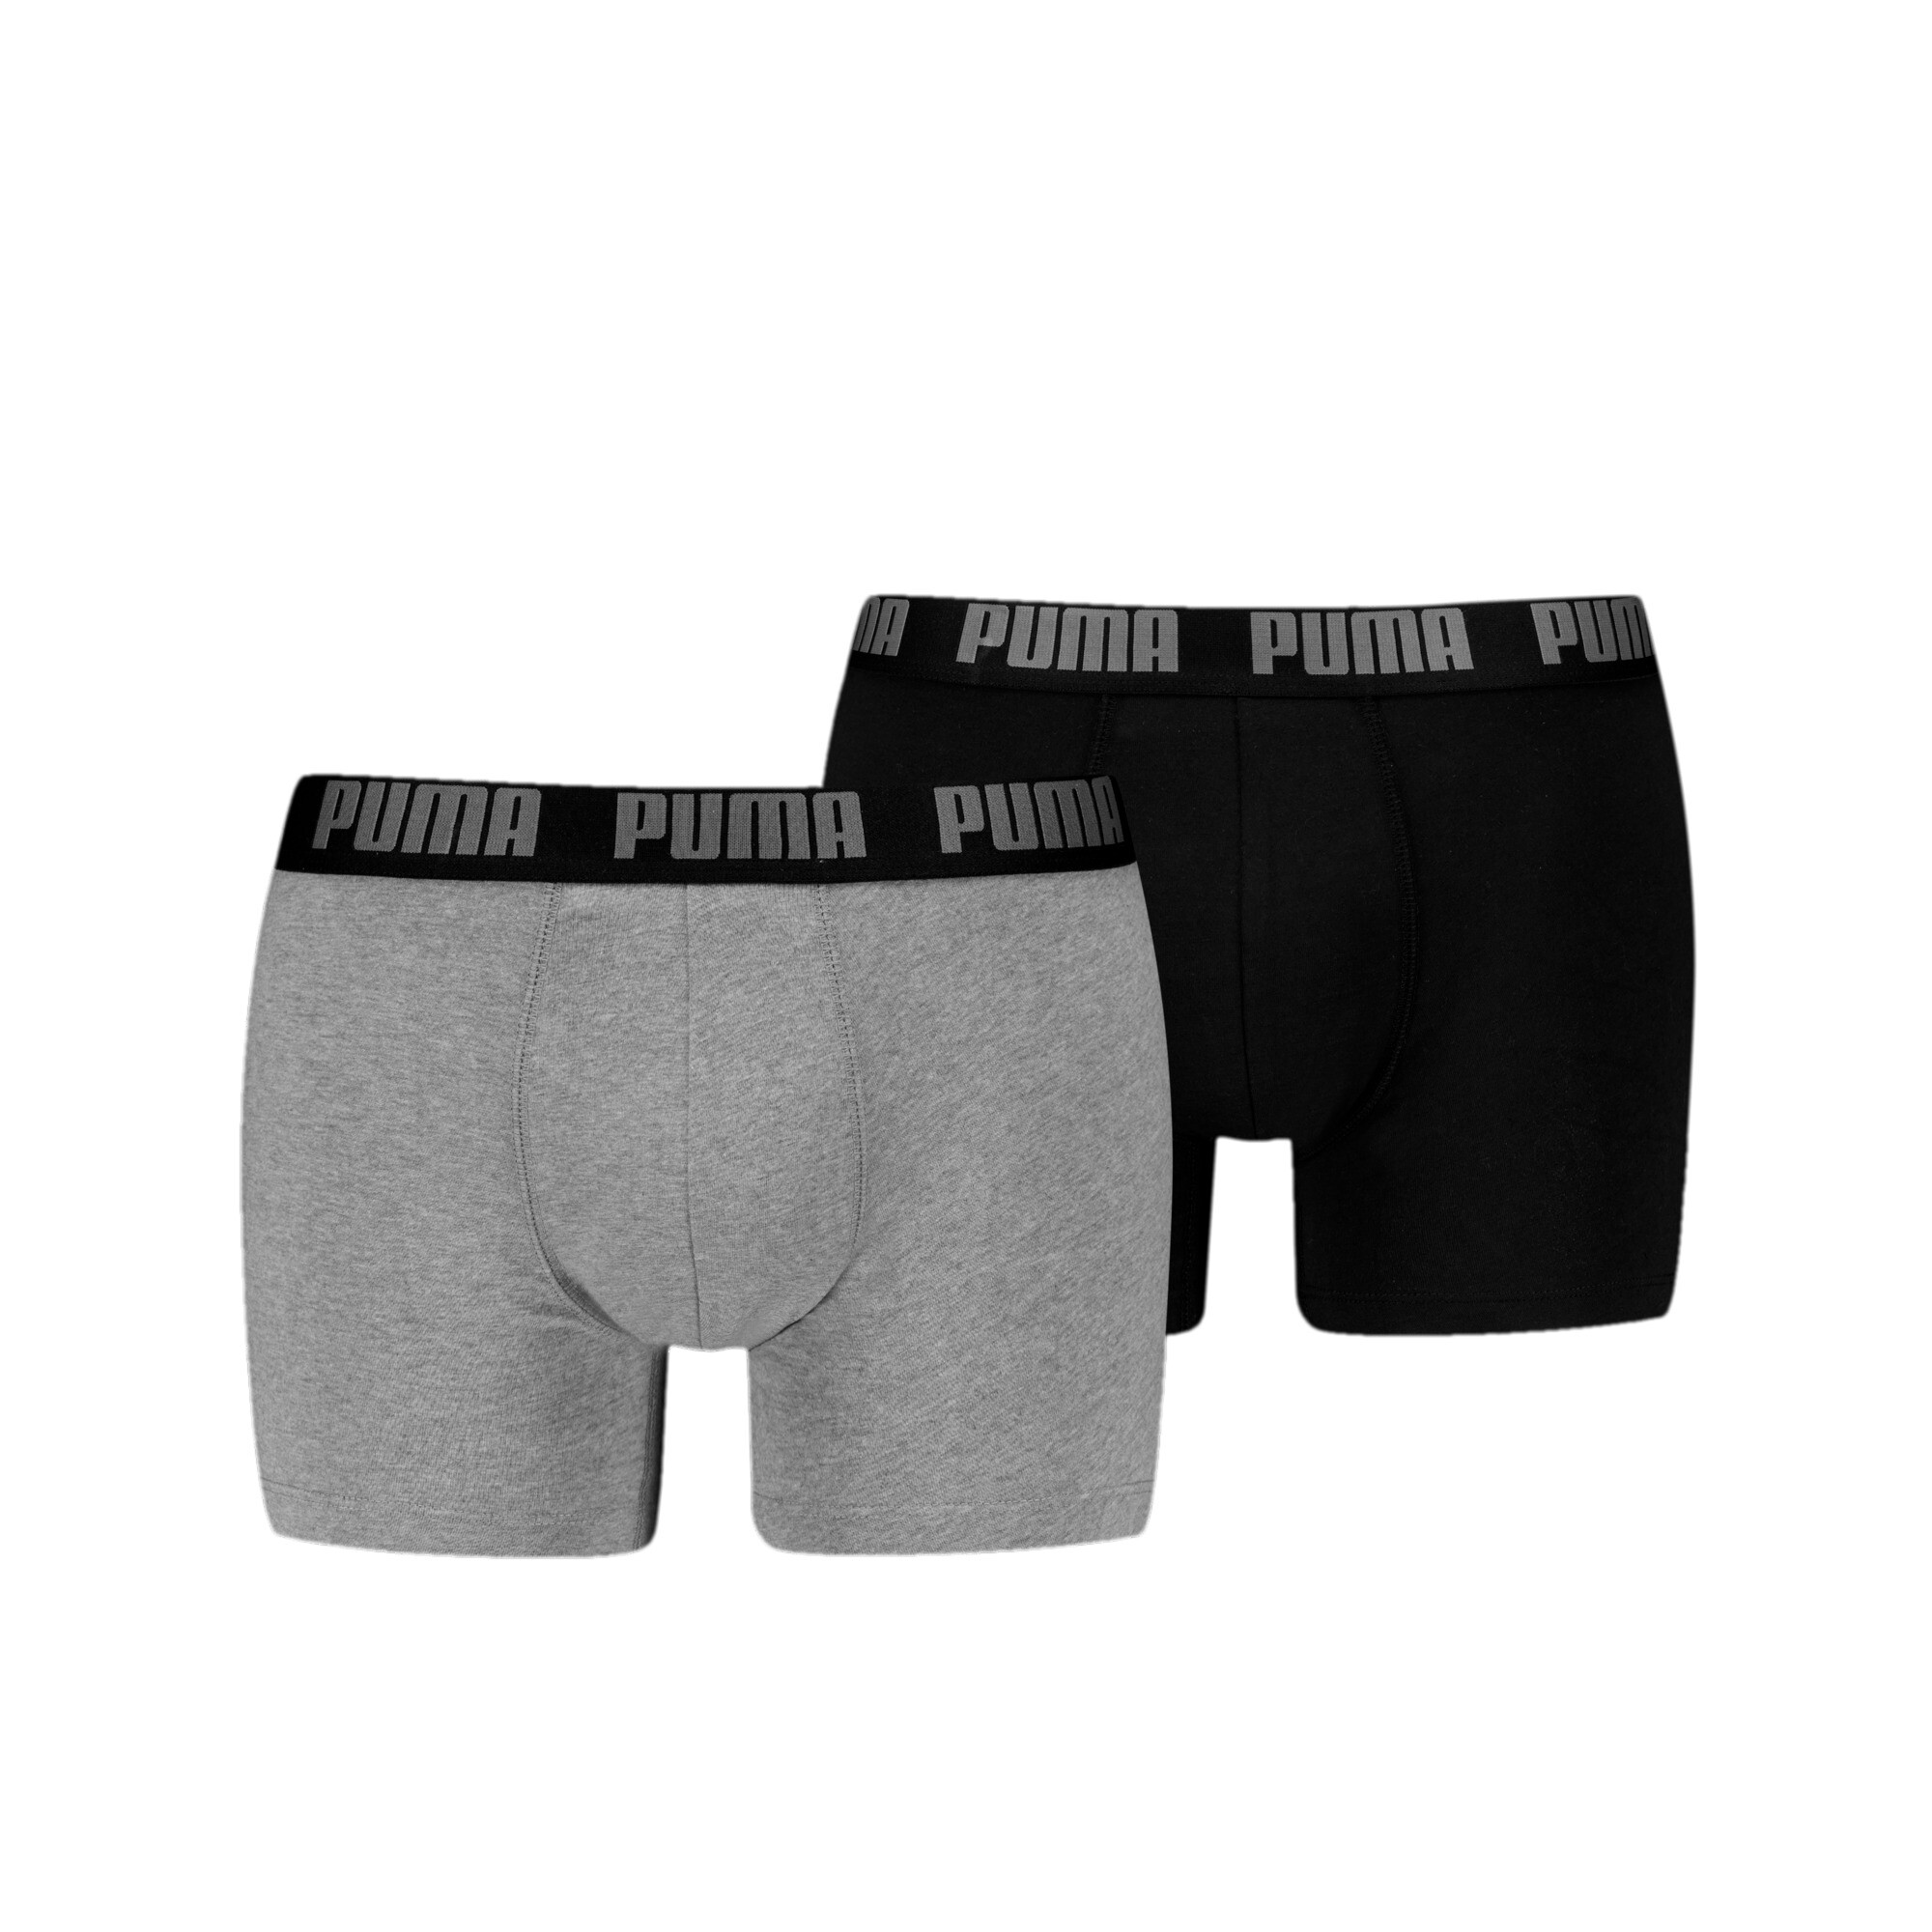 Men's Puma's Boxer Briefs 2 Pack, Gray, Size 6, Clothing